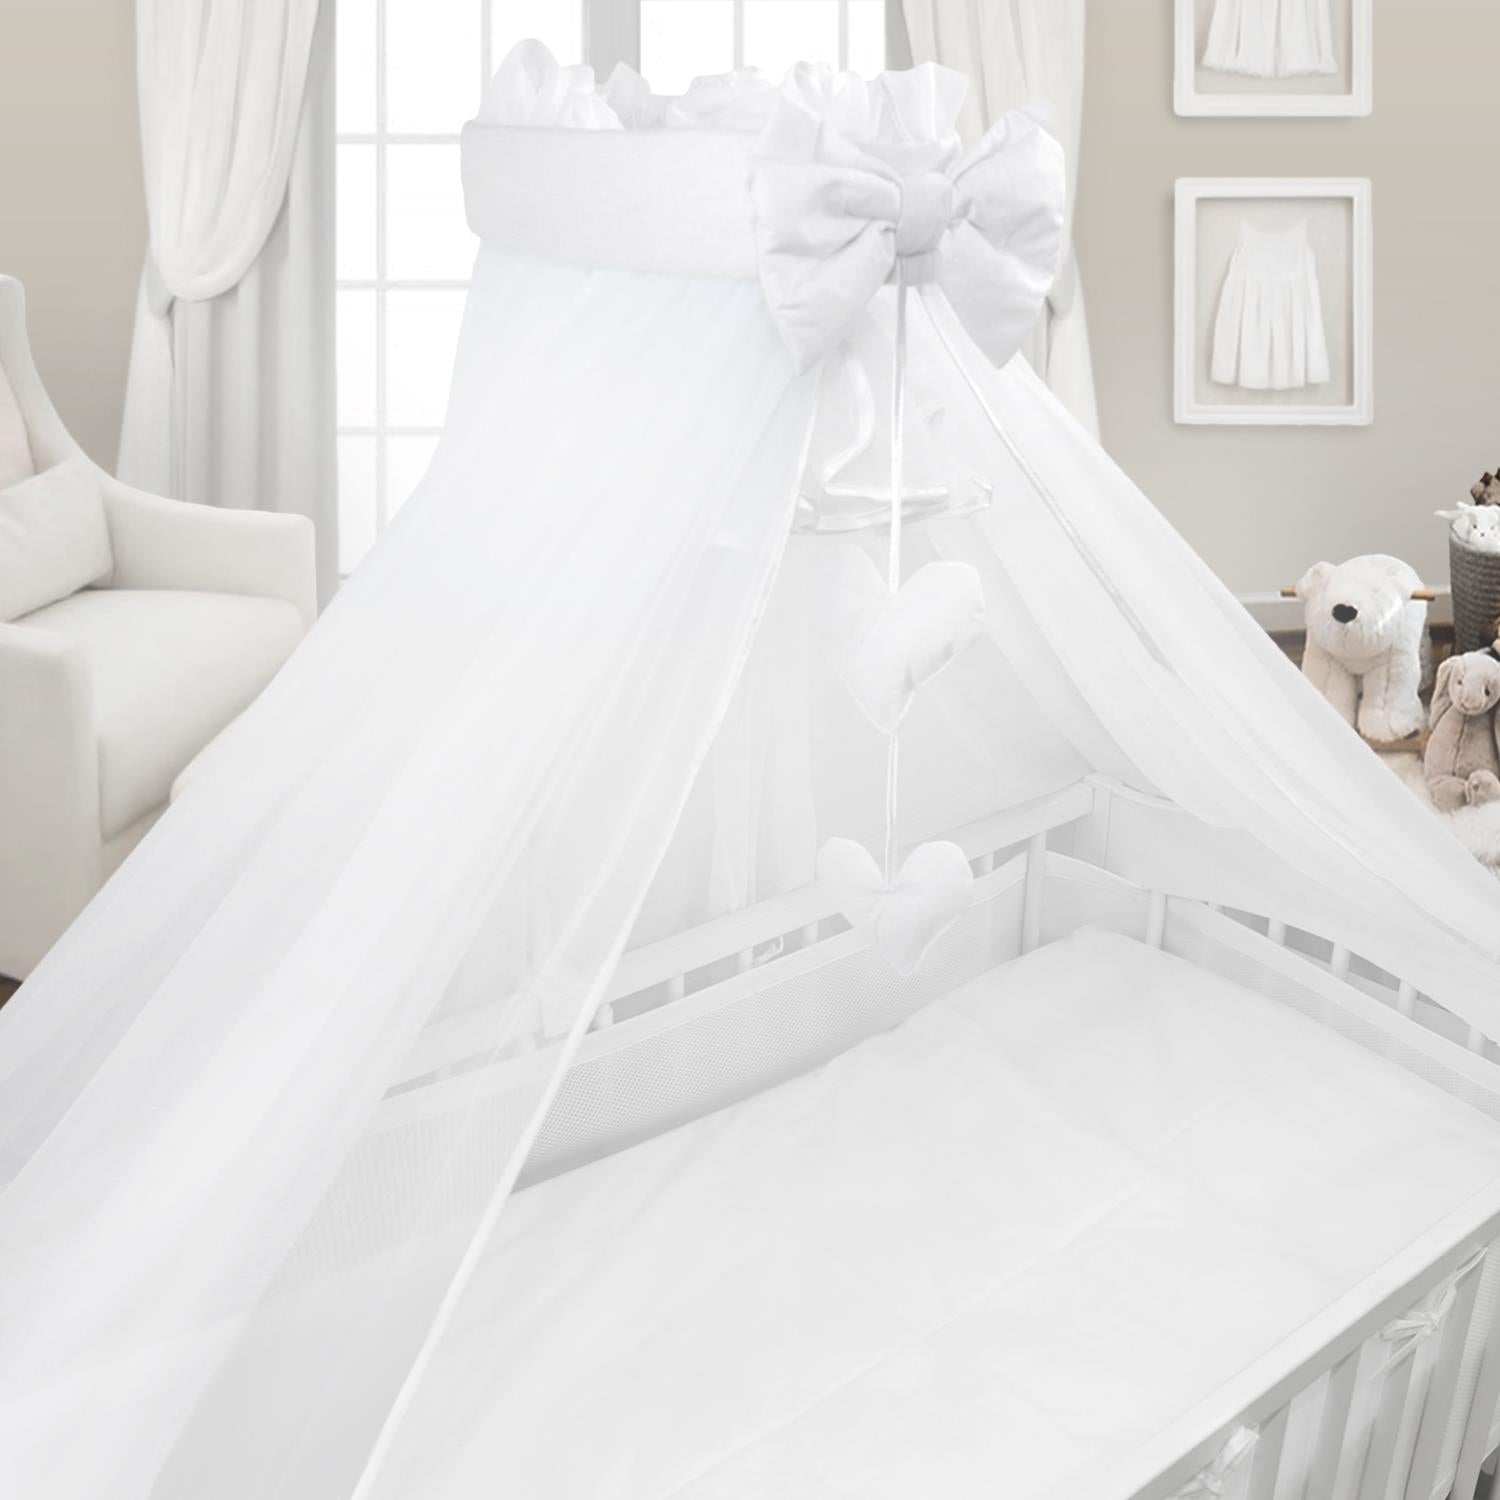 Baby Cot Bedding Set 9pc Fit Cot 120x60cm White